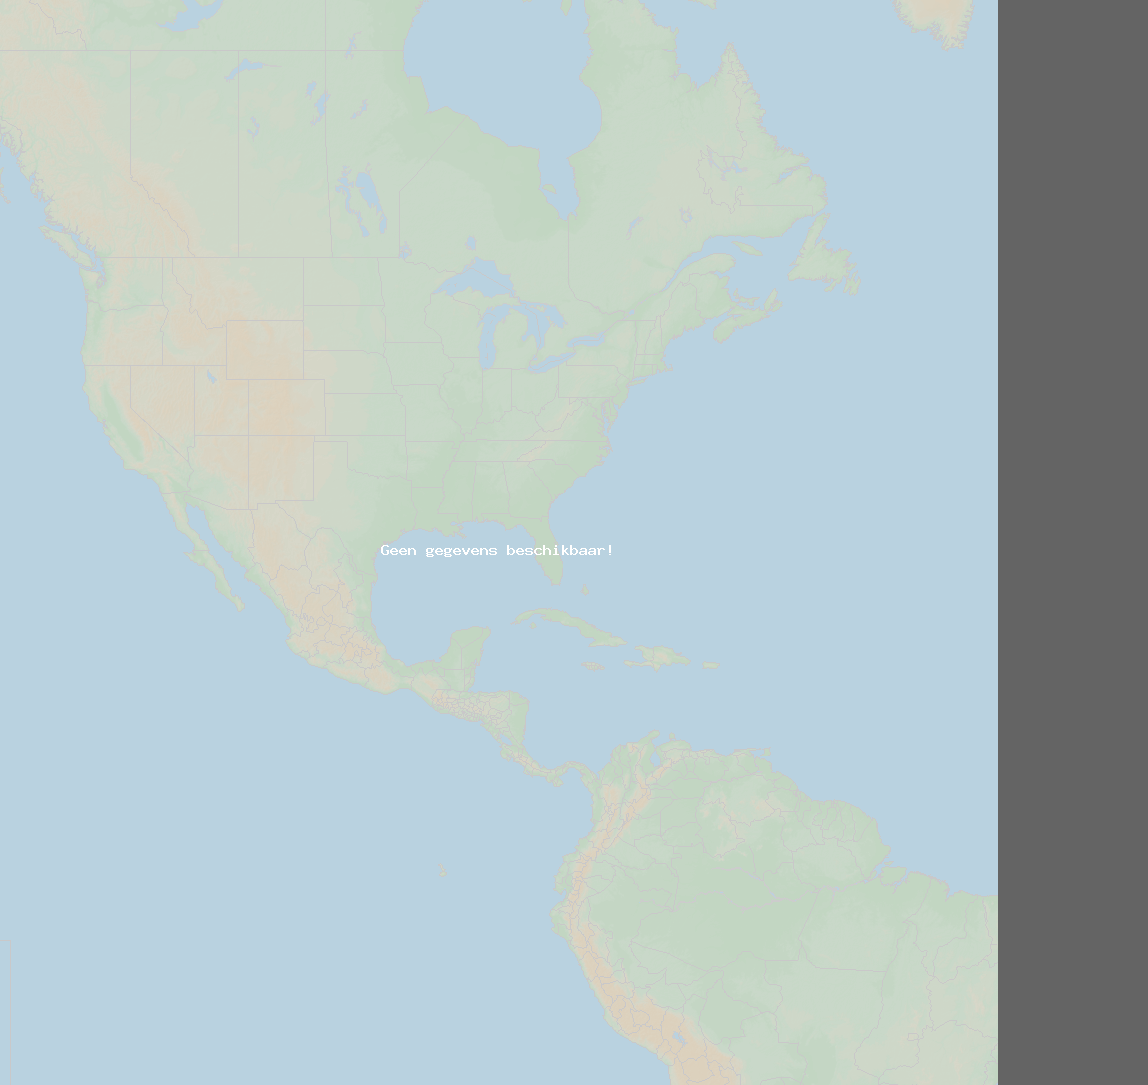 Inslagverhouding (Station Renaico, IX Region) North America 2024 